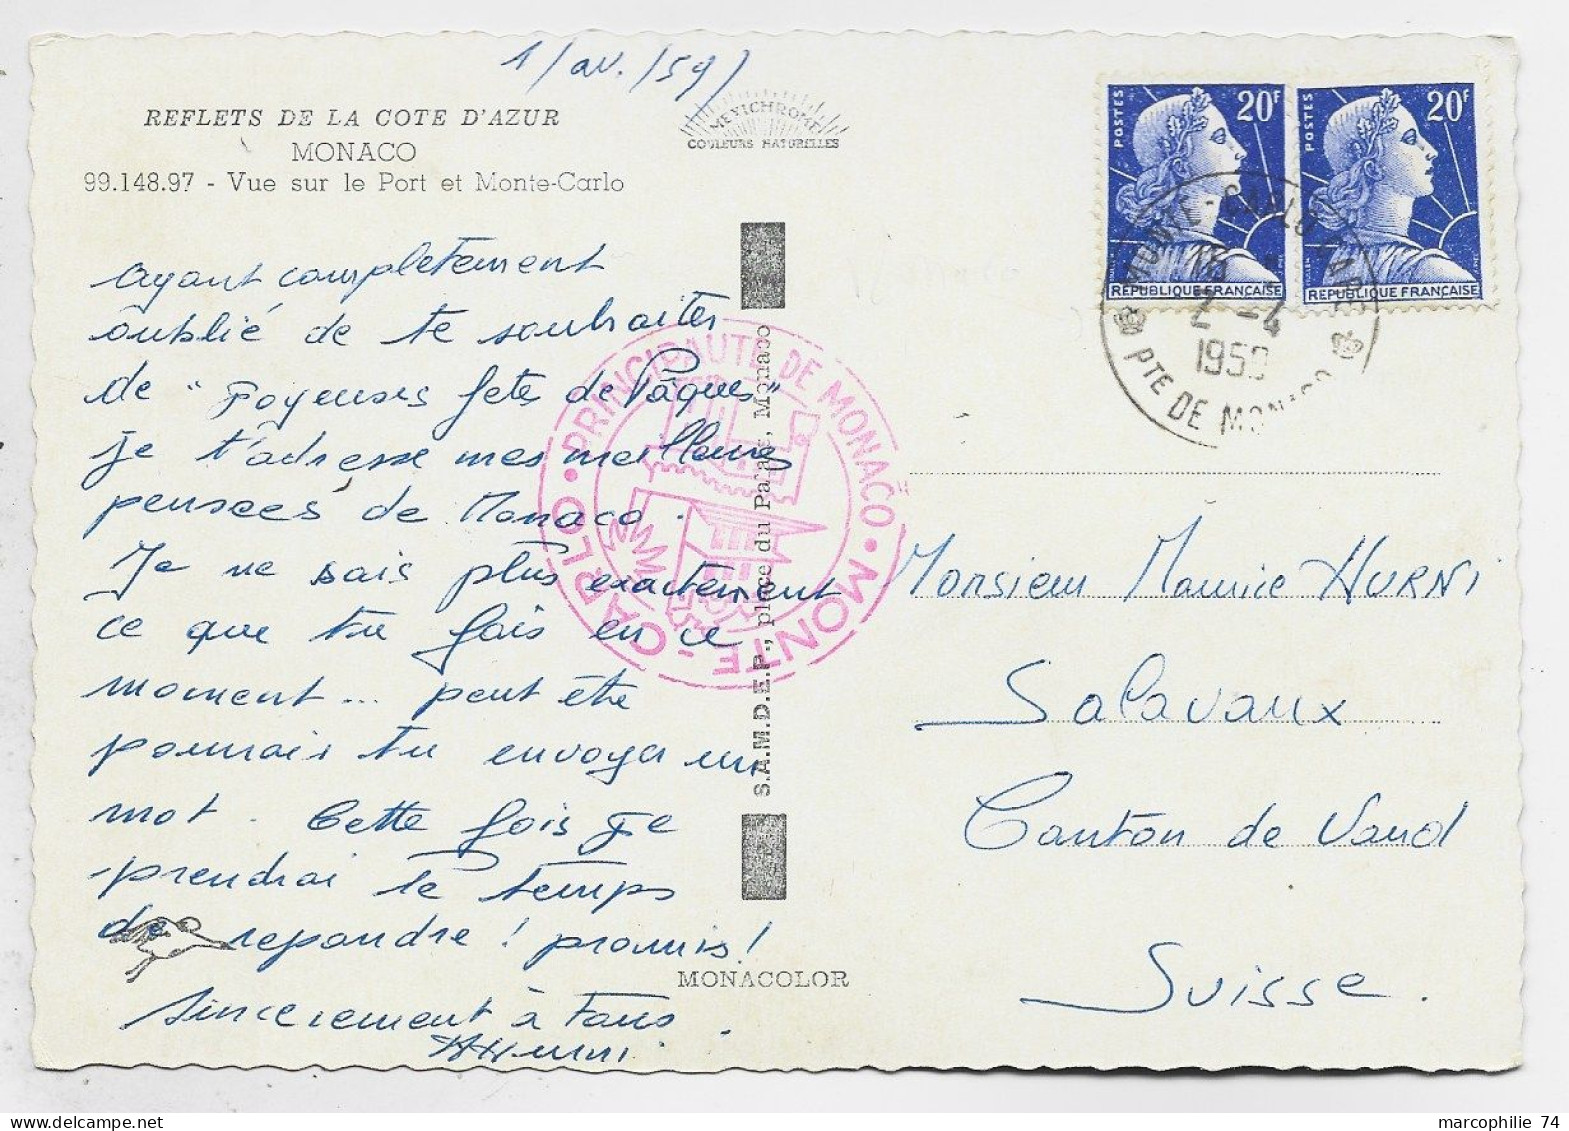 MULLER 20FRX2 CARTE TIMBRE A DATE MONTE CARLO  GARE 2.4.1959 PTE DE MONACO POUR SUISSE OBLITERATION RARE COTE 160€ - Railway Post